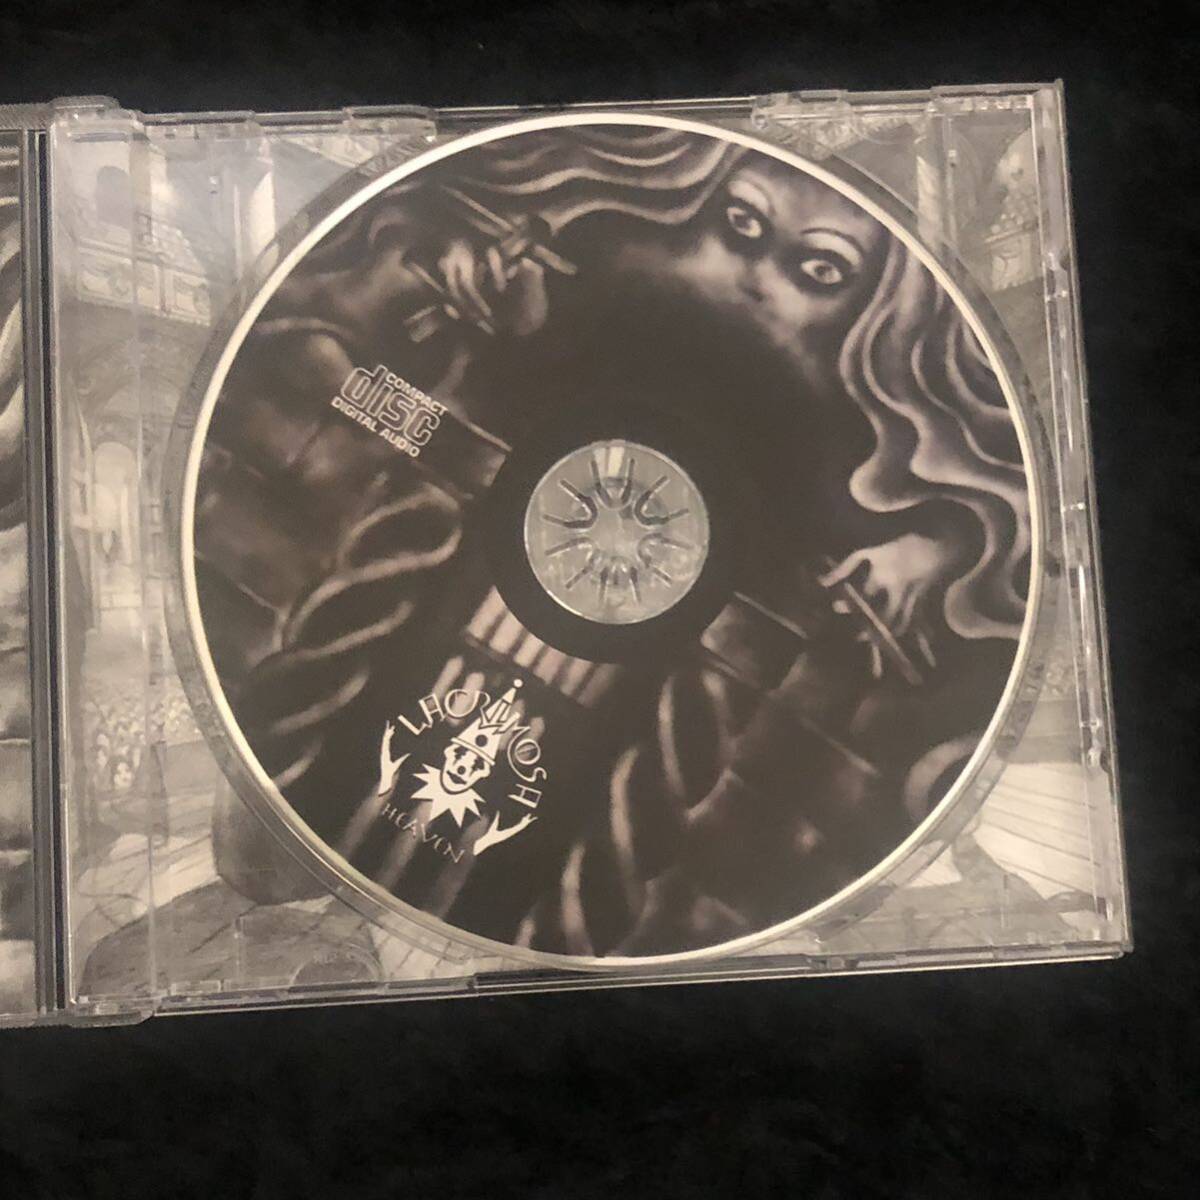 LACRIMOSA - B-Side in Heaven 1993 - 1999 (CD) Gothic Goth Metal_画像4